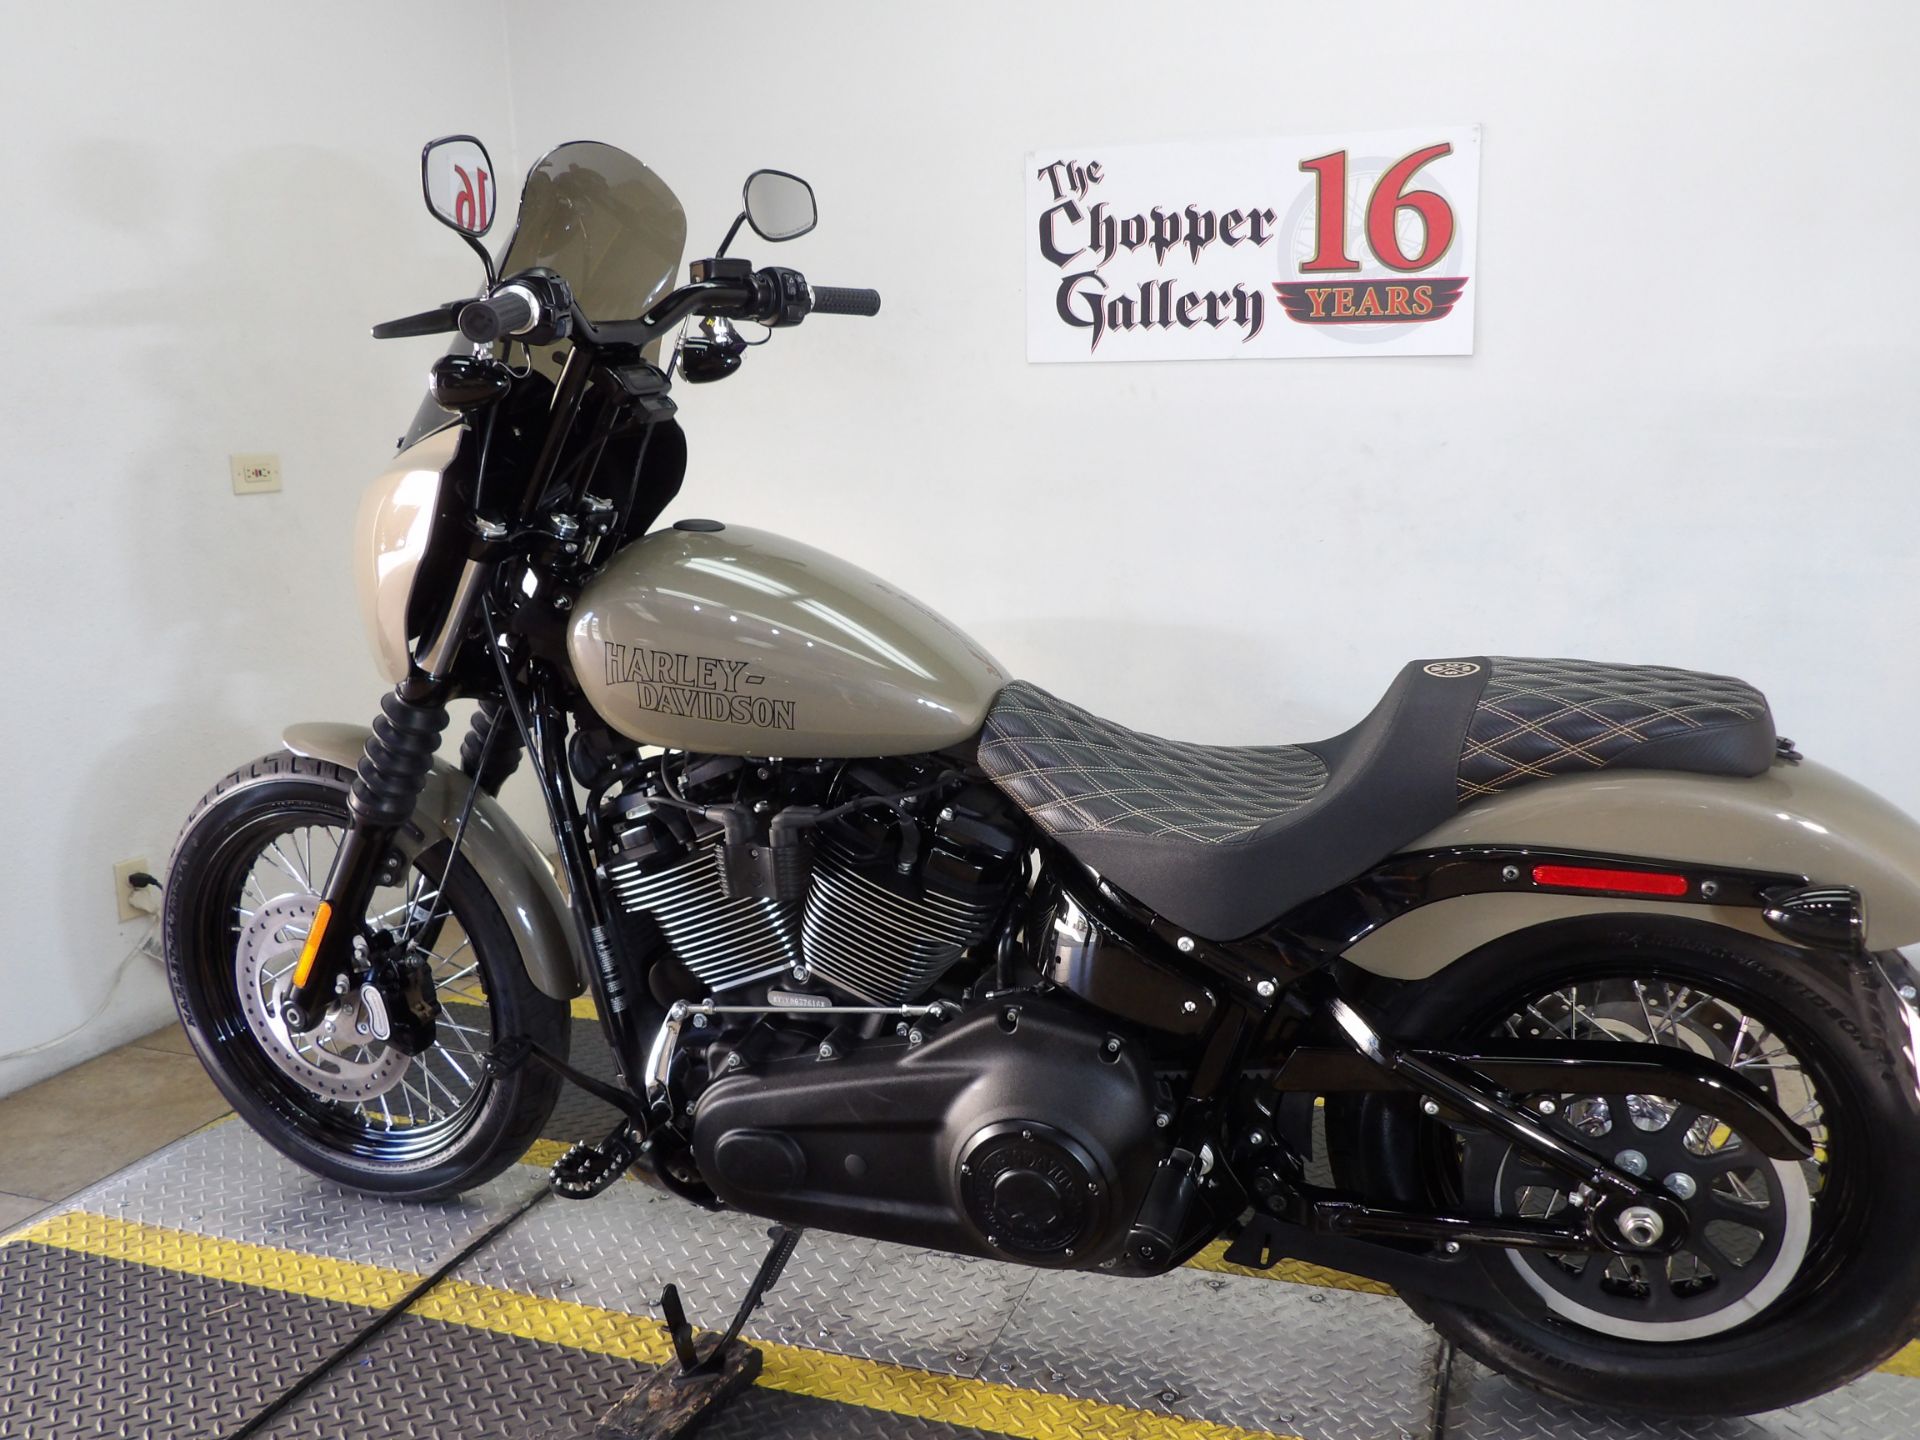 2021 Harley-Davidson Street Bob® 114 in Temecula, California - Photo 21